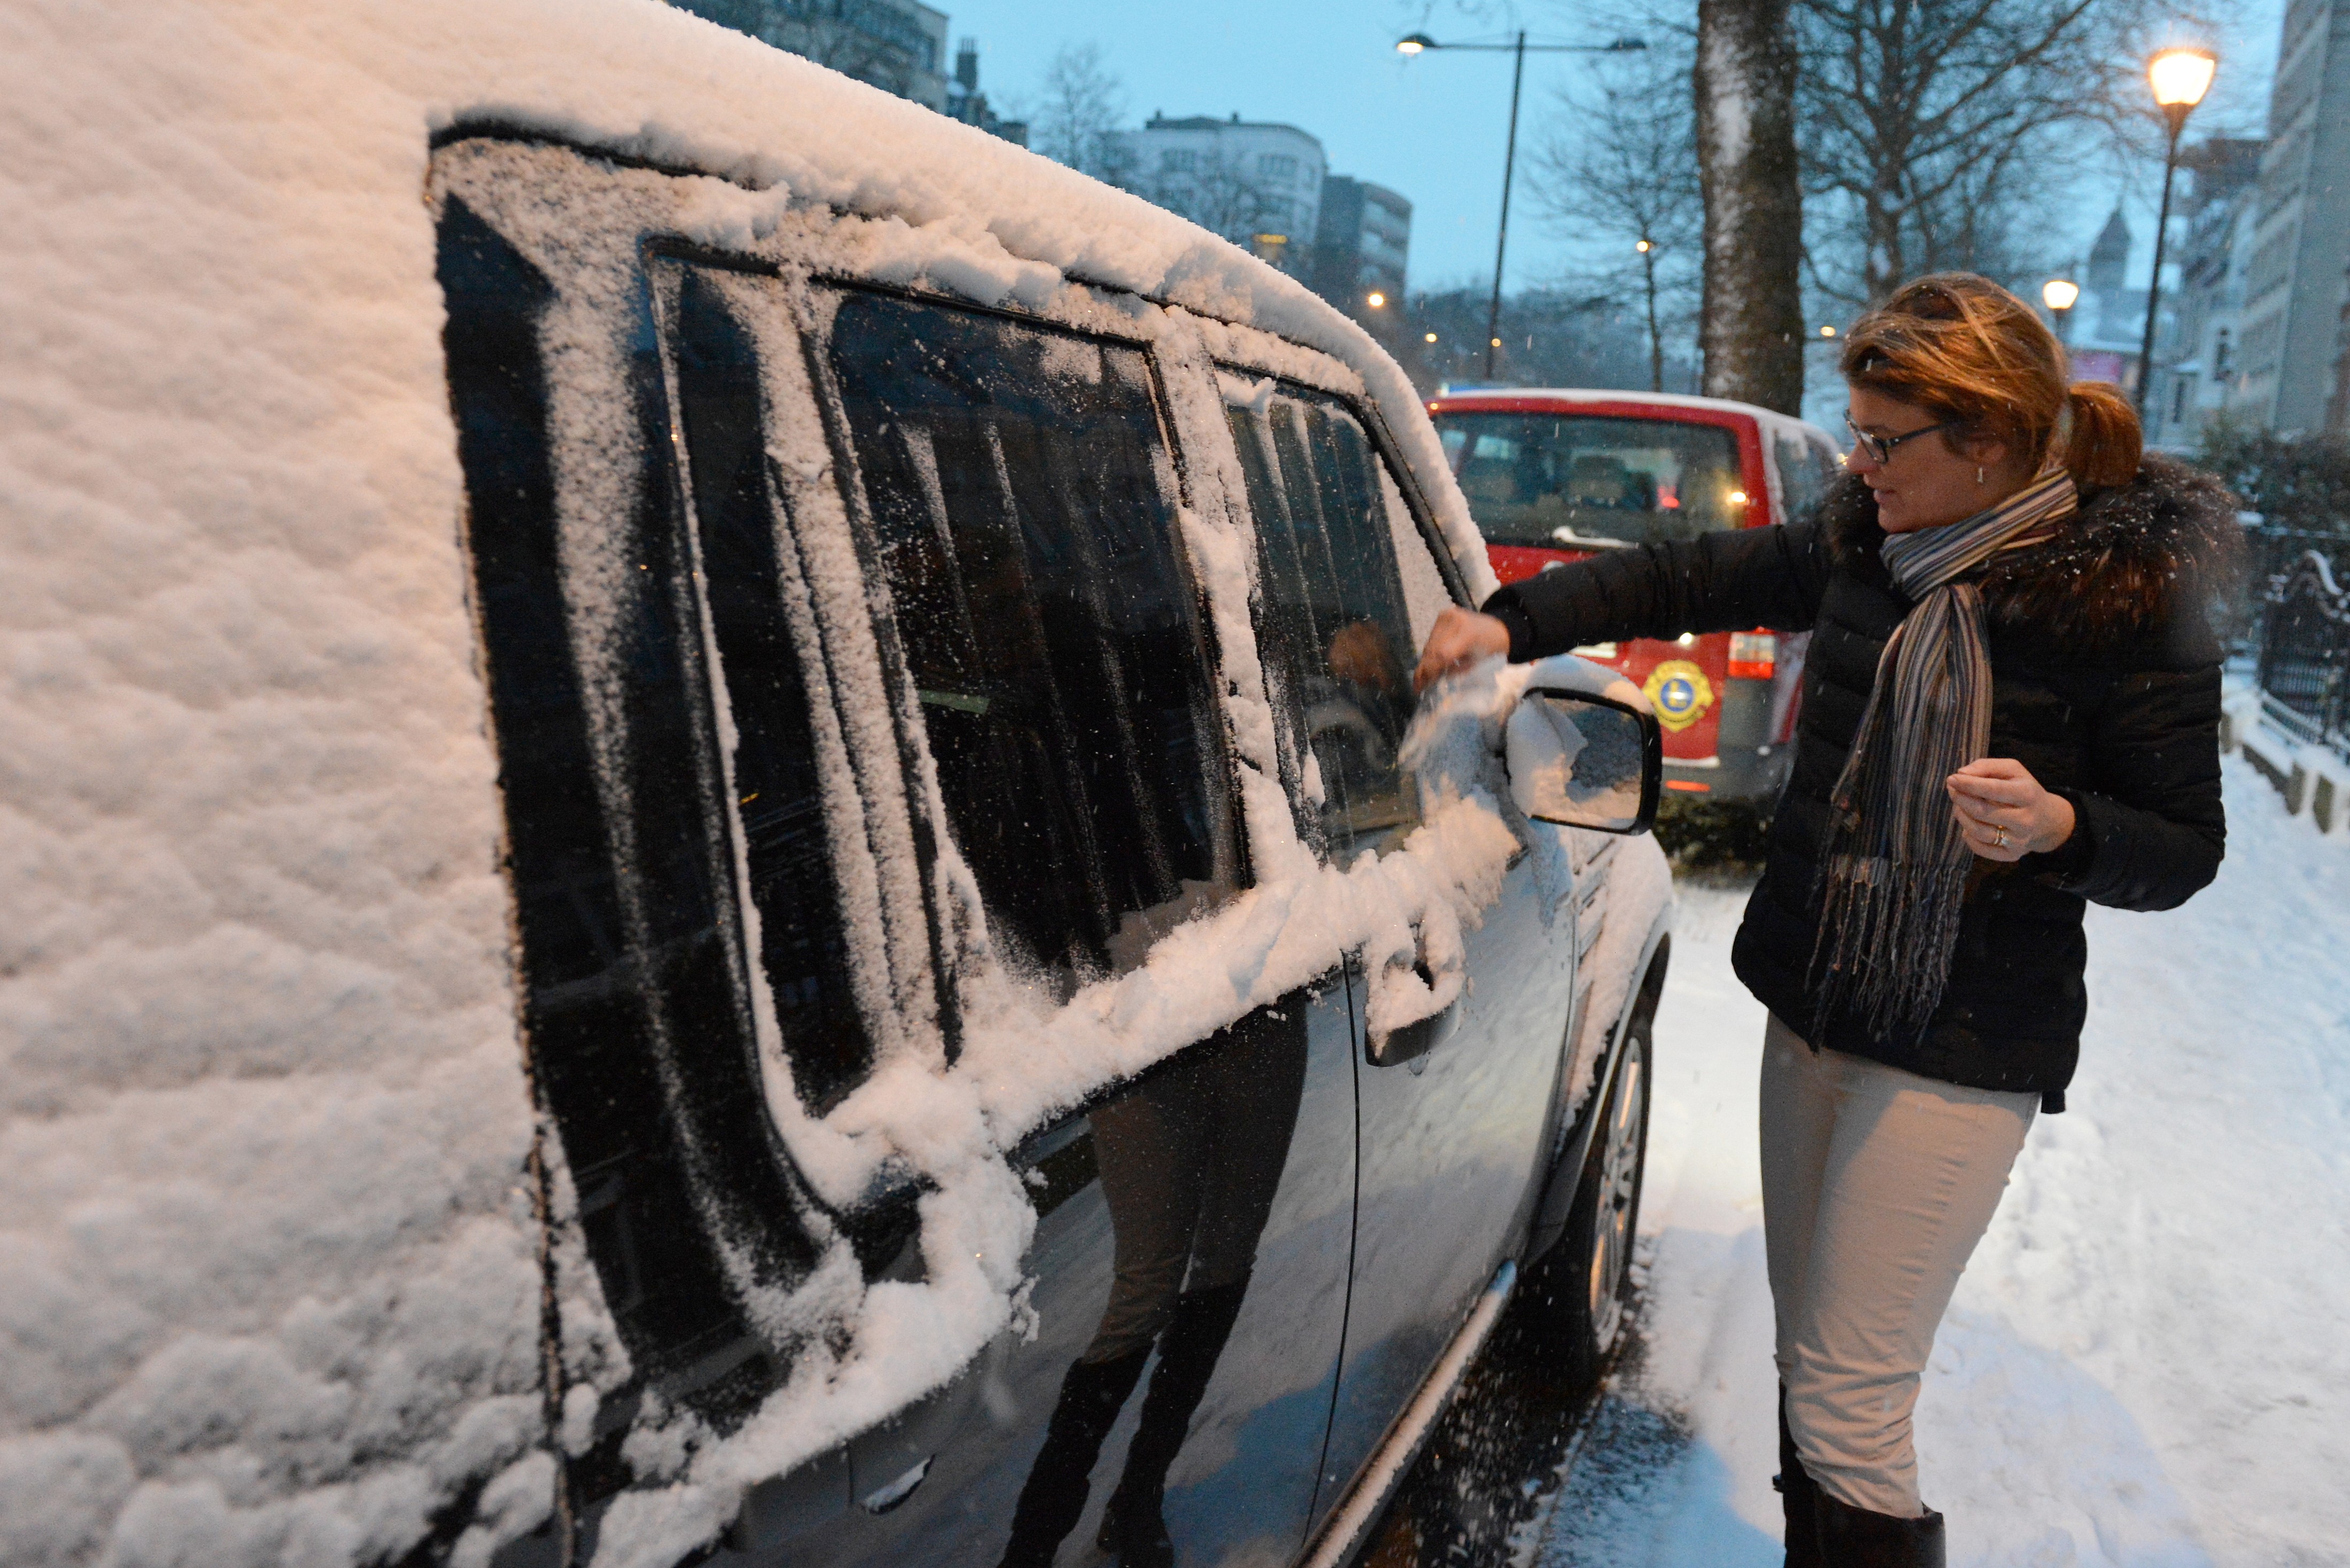 Froid polaire, neige: comment protéger sa voiture